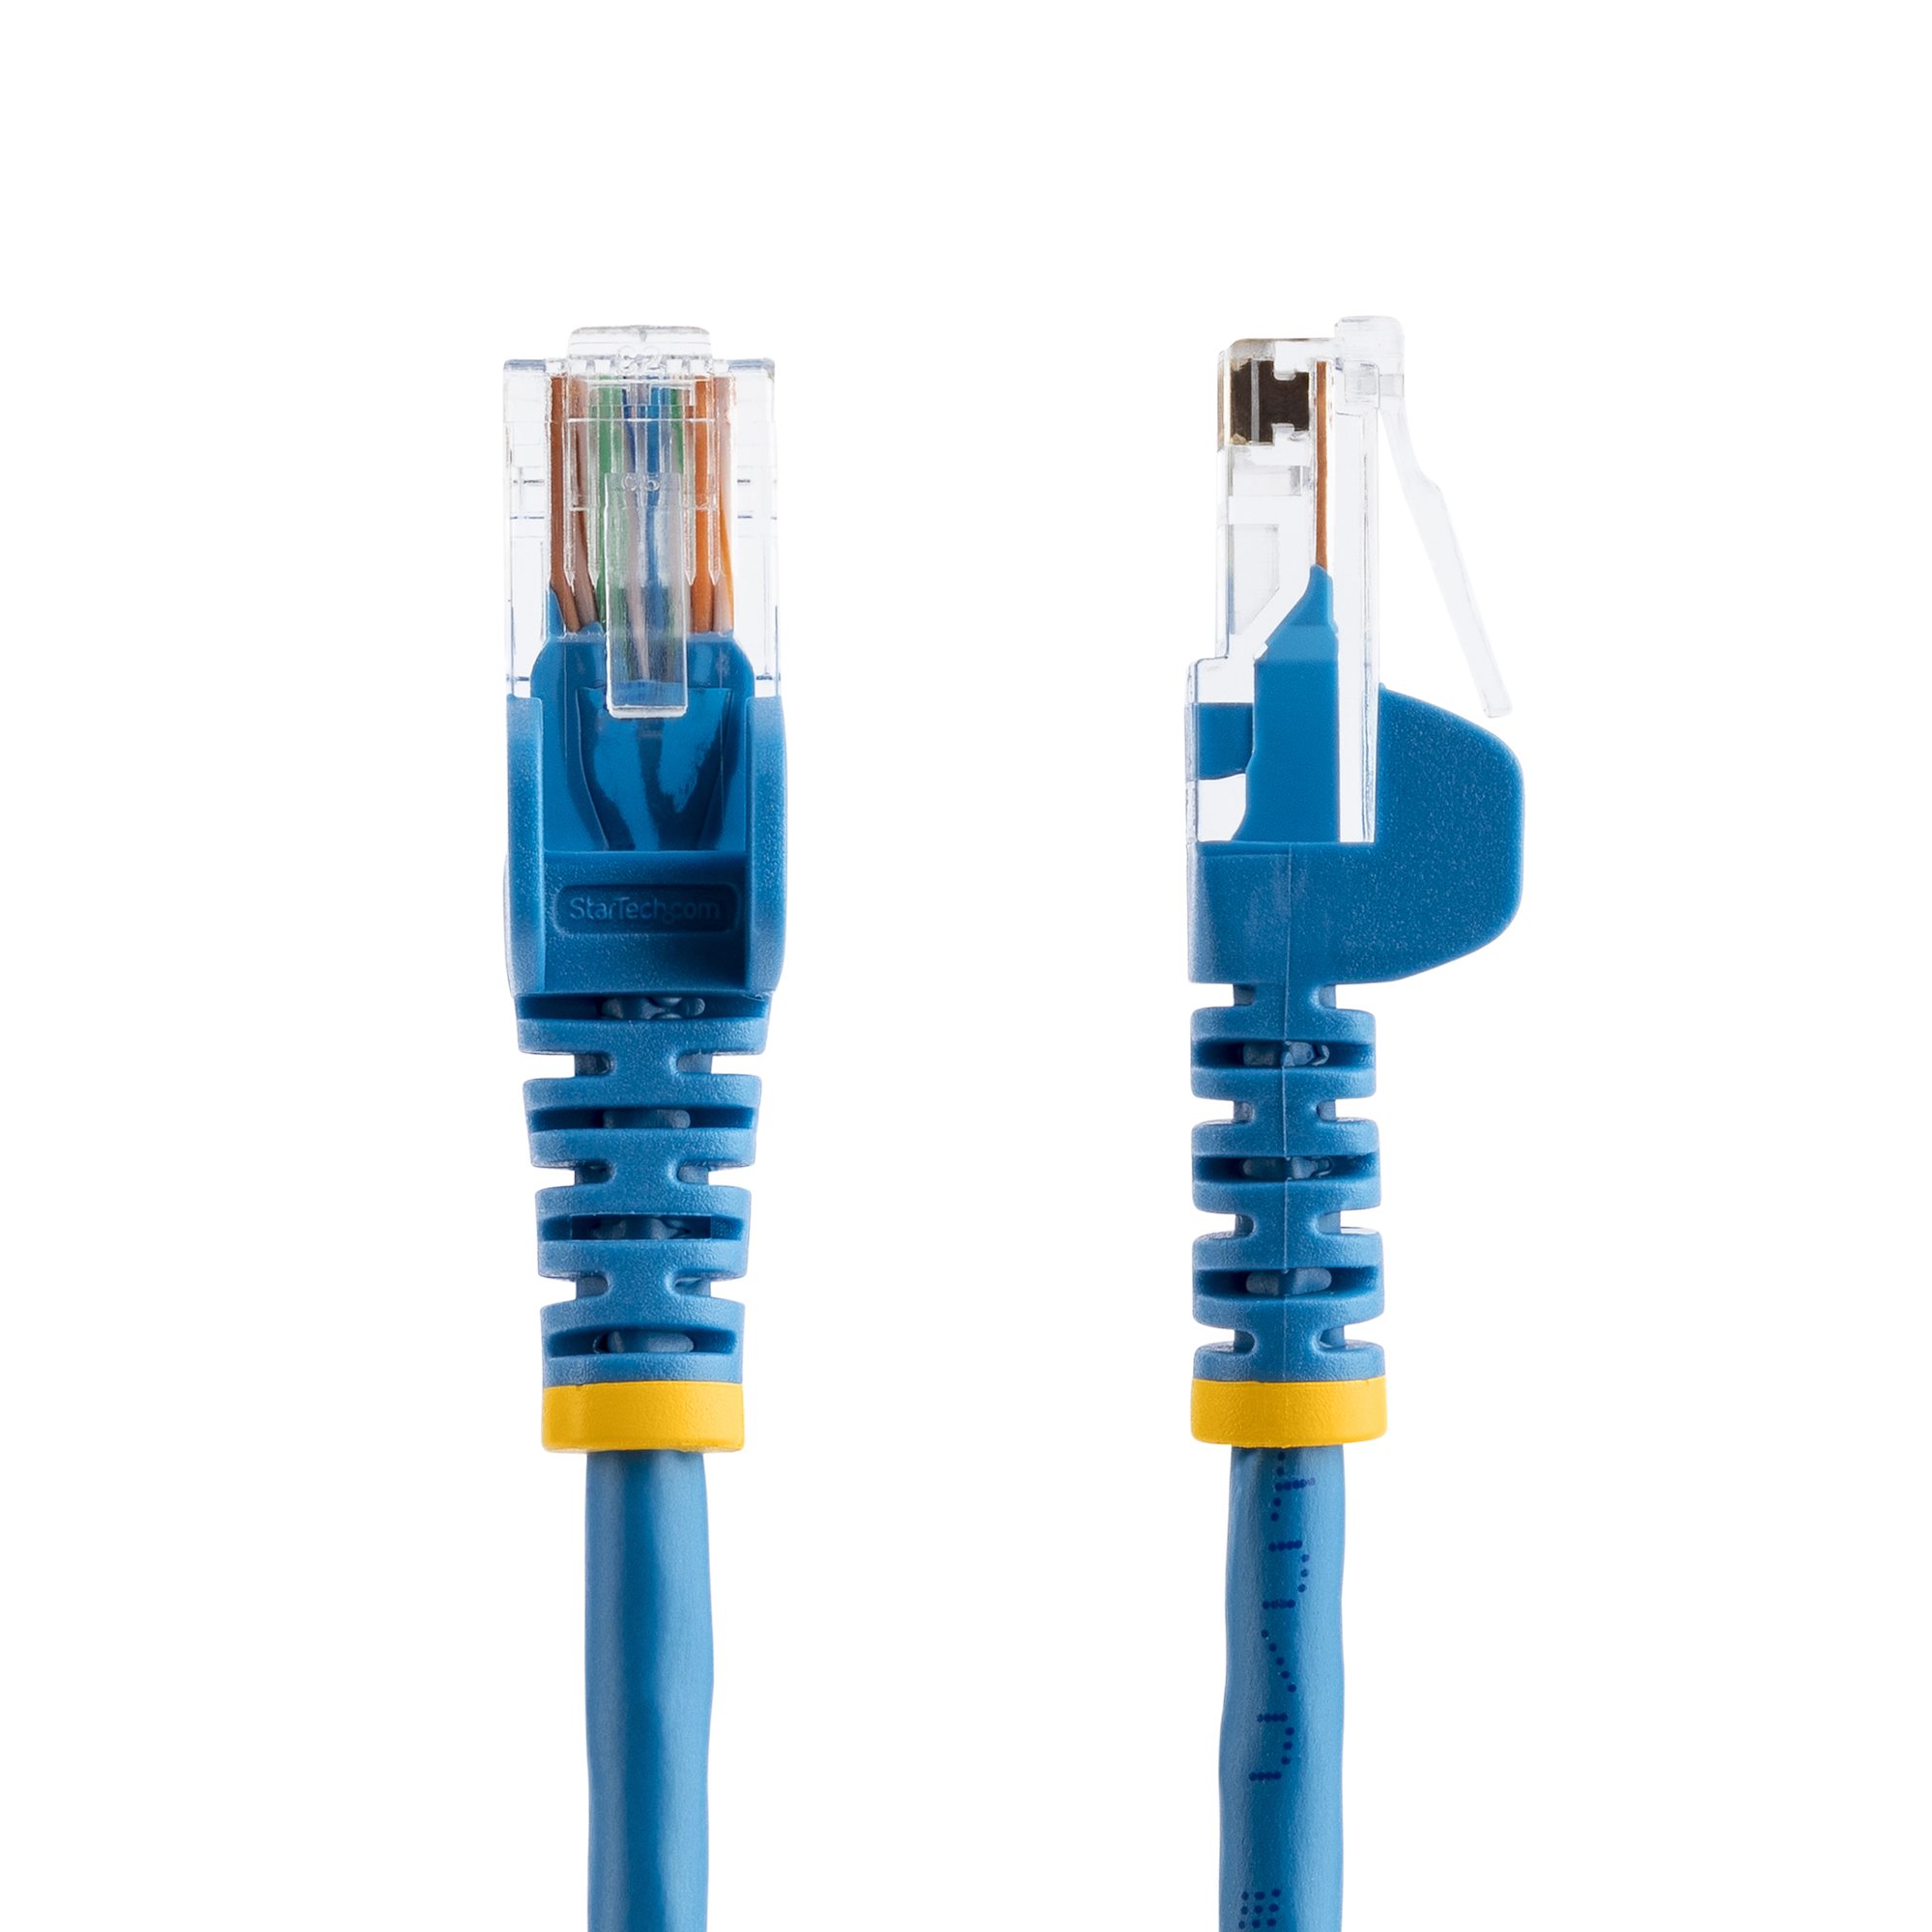 50 ft Blue Snagless Cat5 UTP Patch Cable (RJ45PATCH50) - Cat 5e